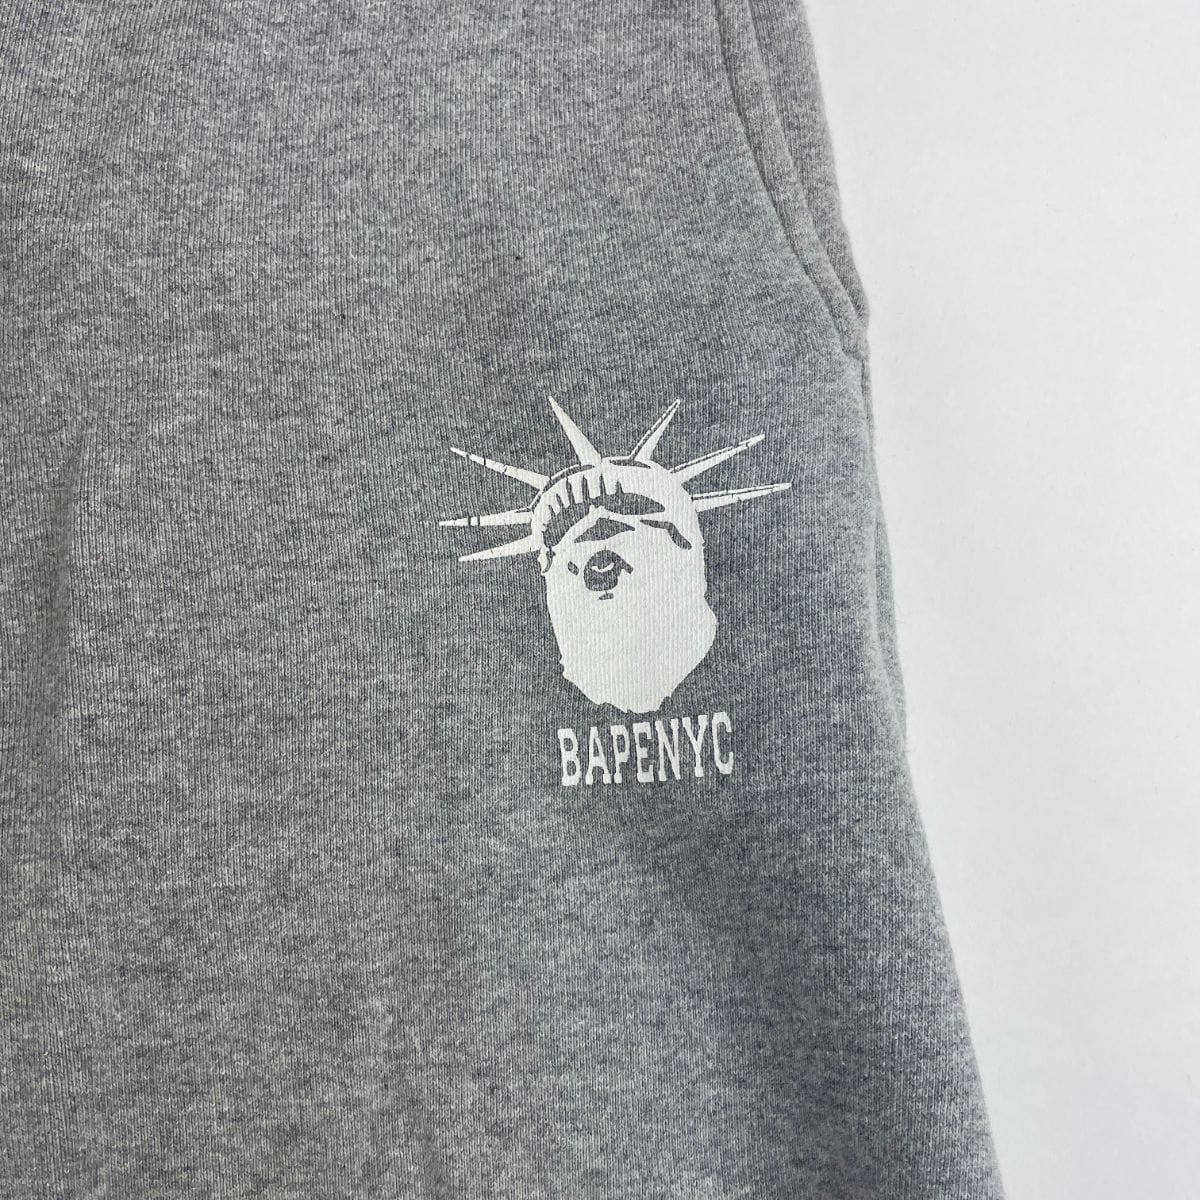 Bape NYC Ape Logo sweatpants Grey - SaruGeneral